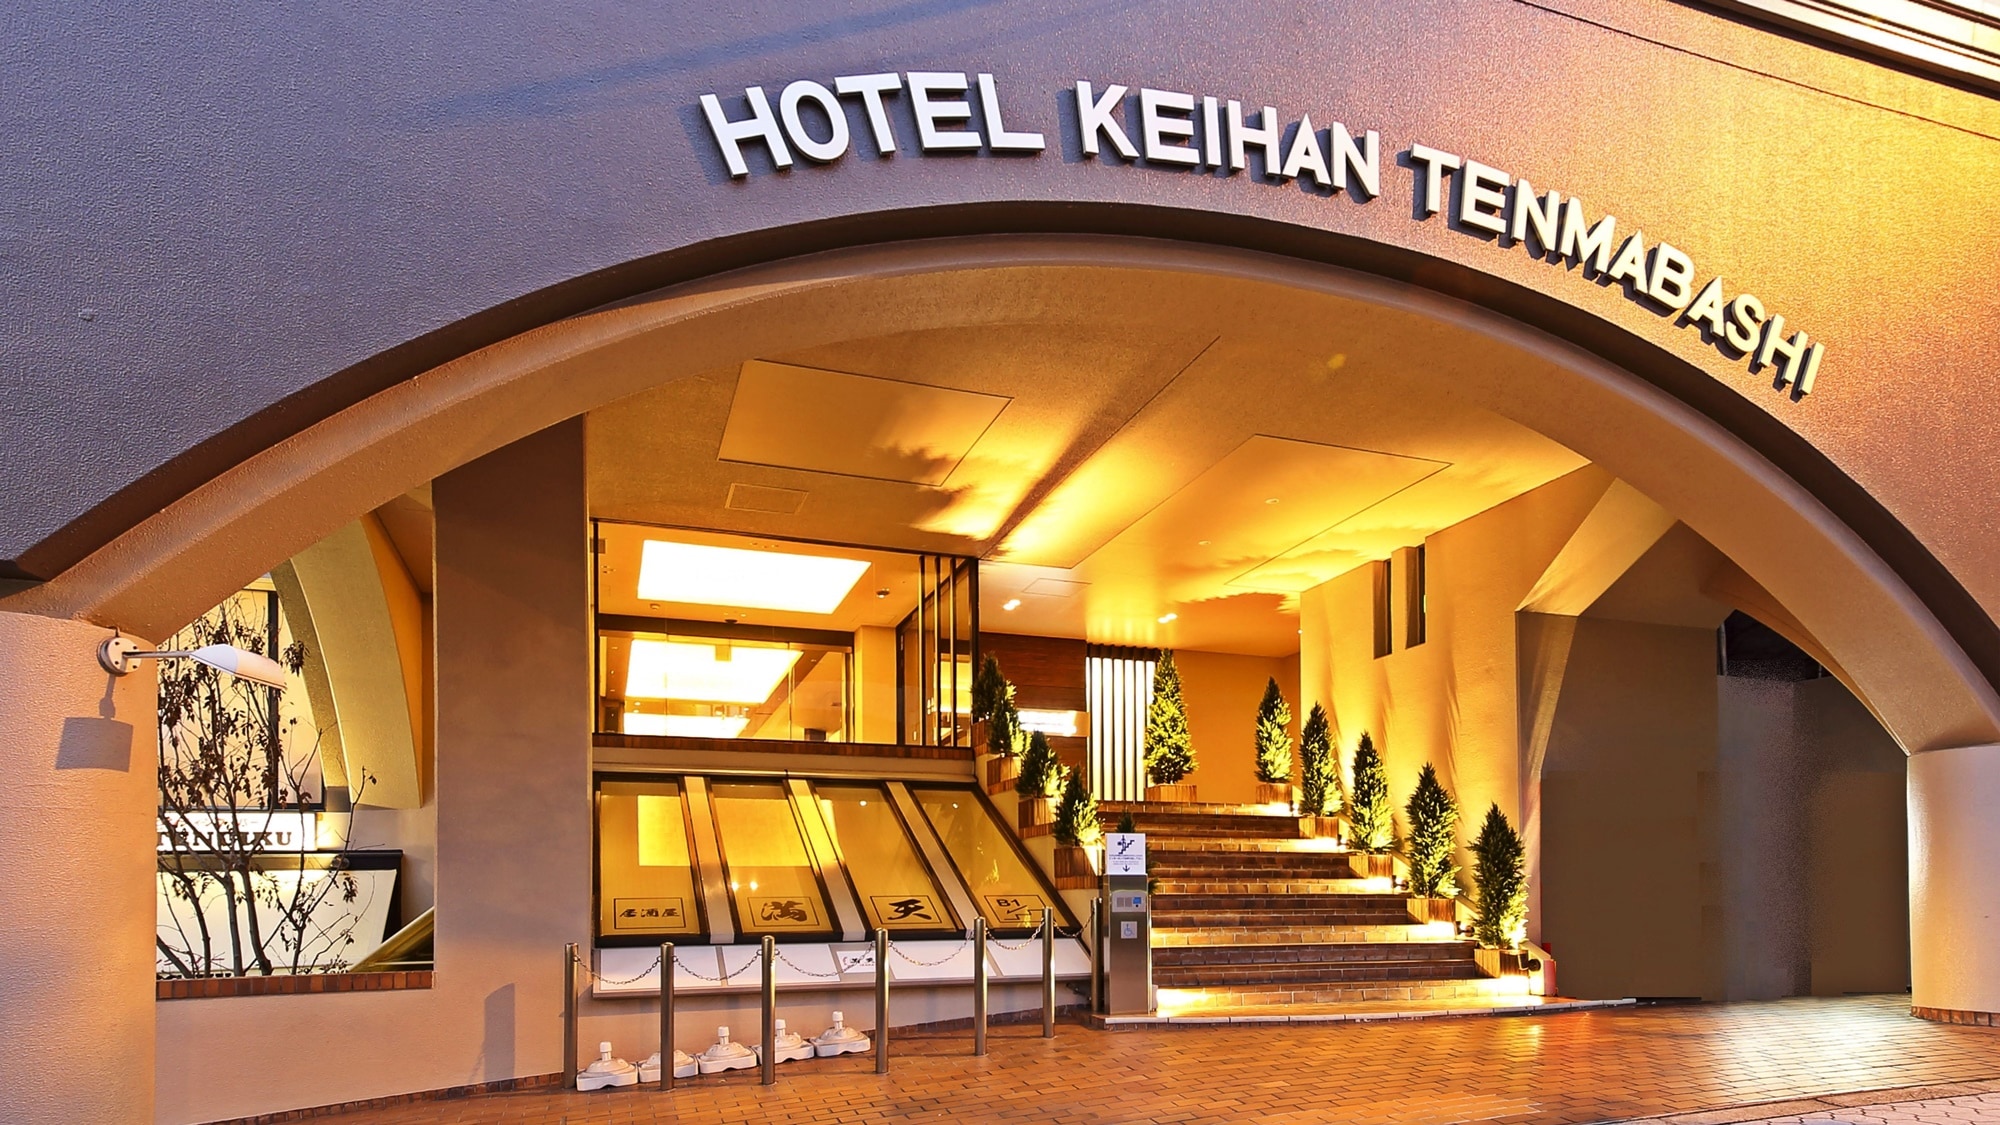 ■ Hotel entrance